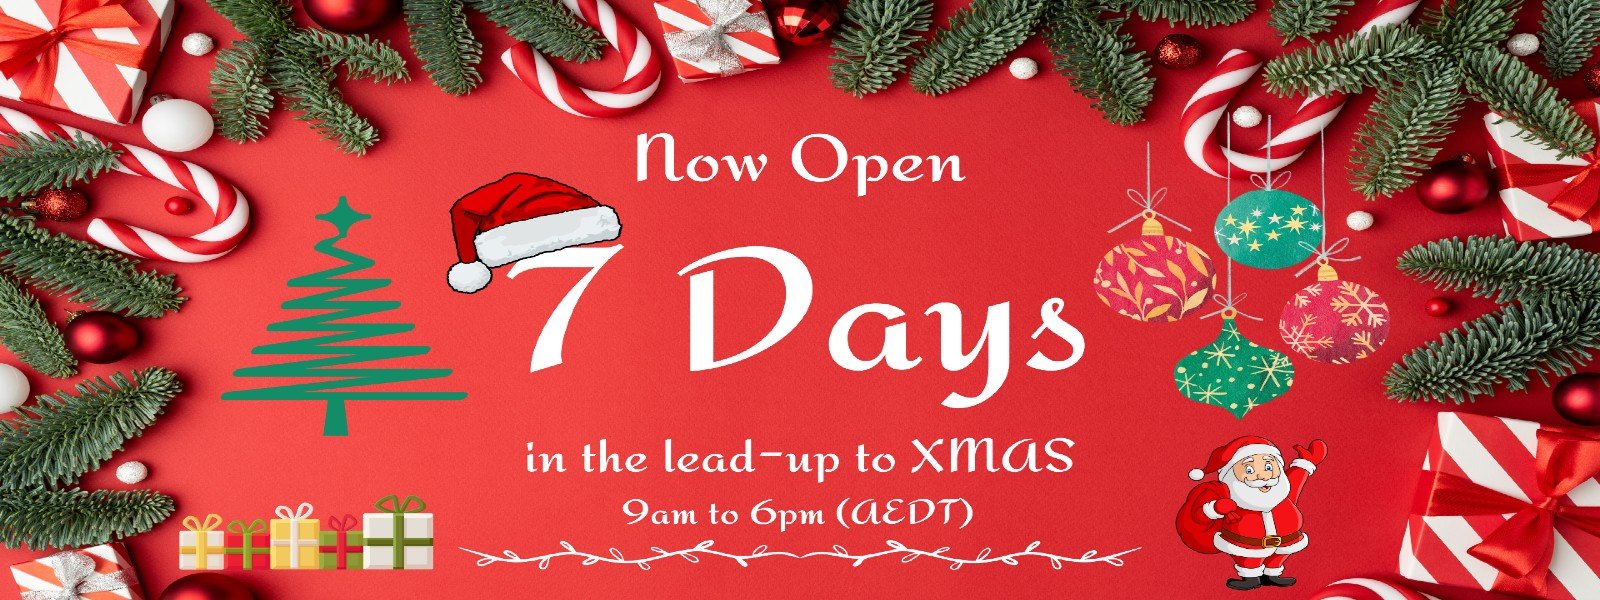 Christmas Open 7 days banner